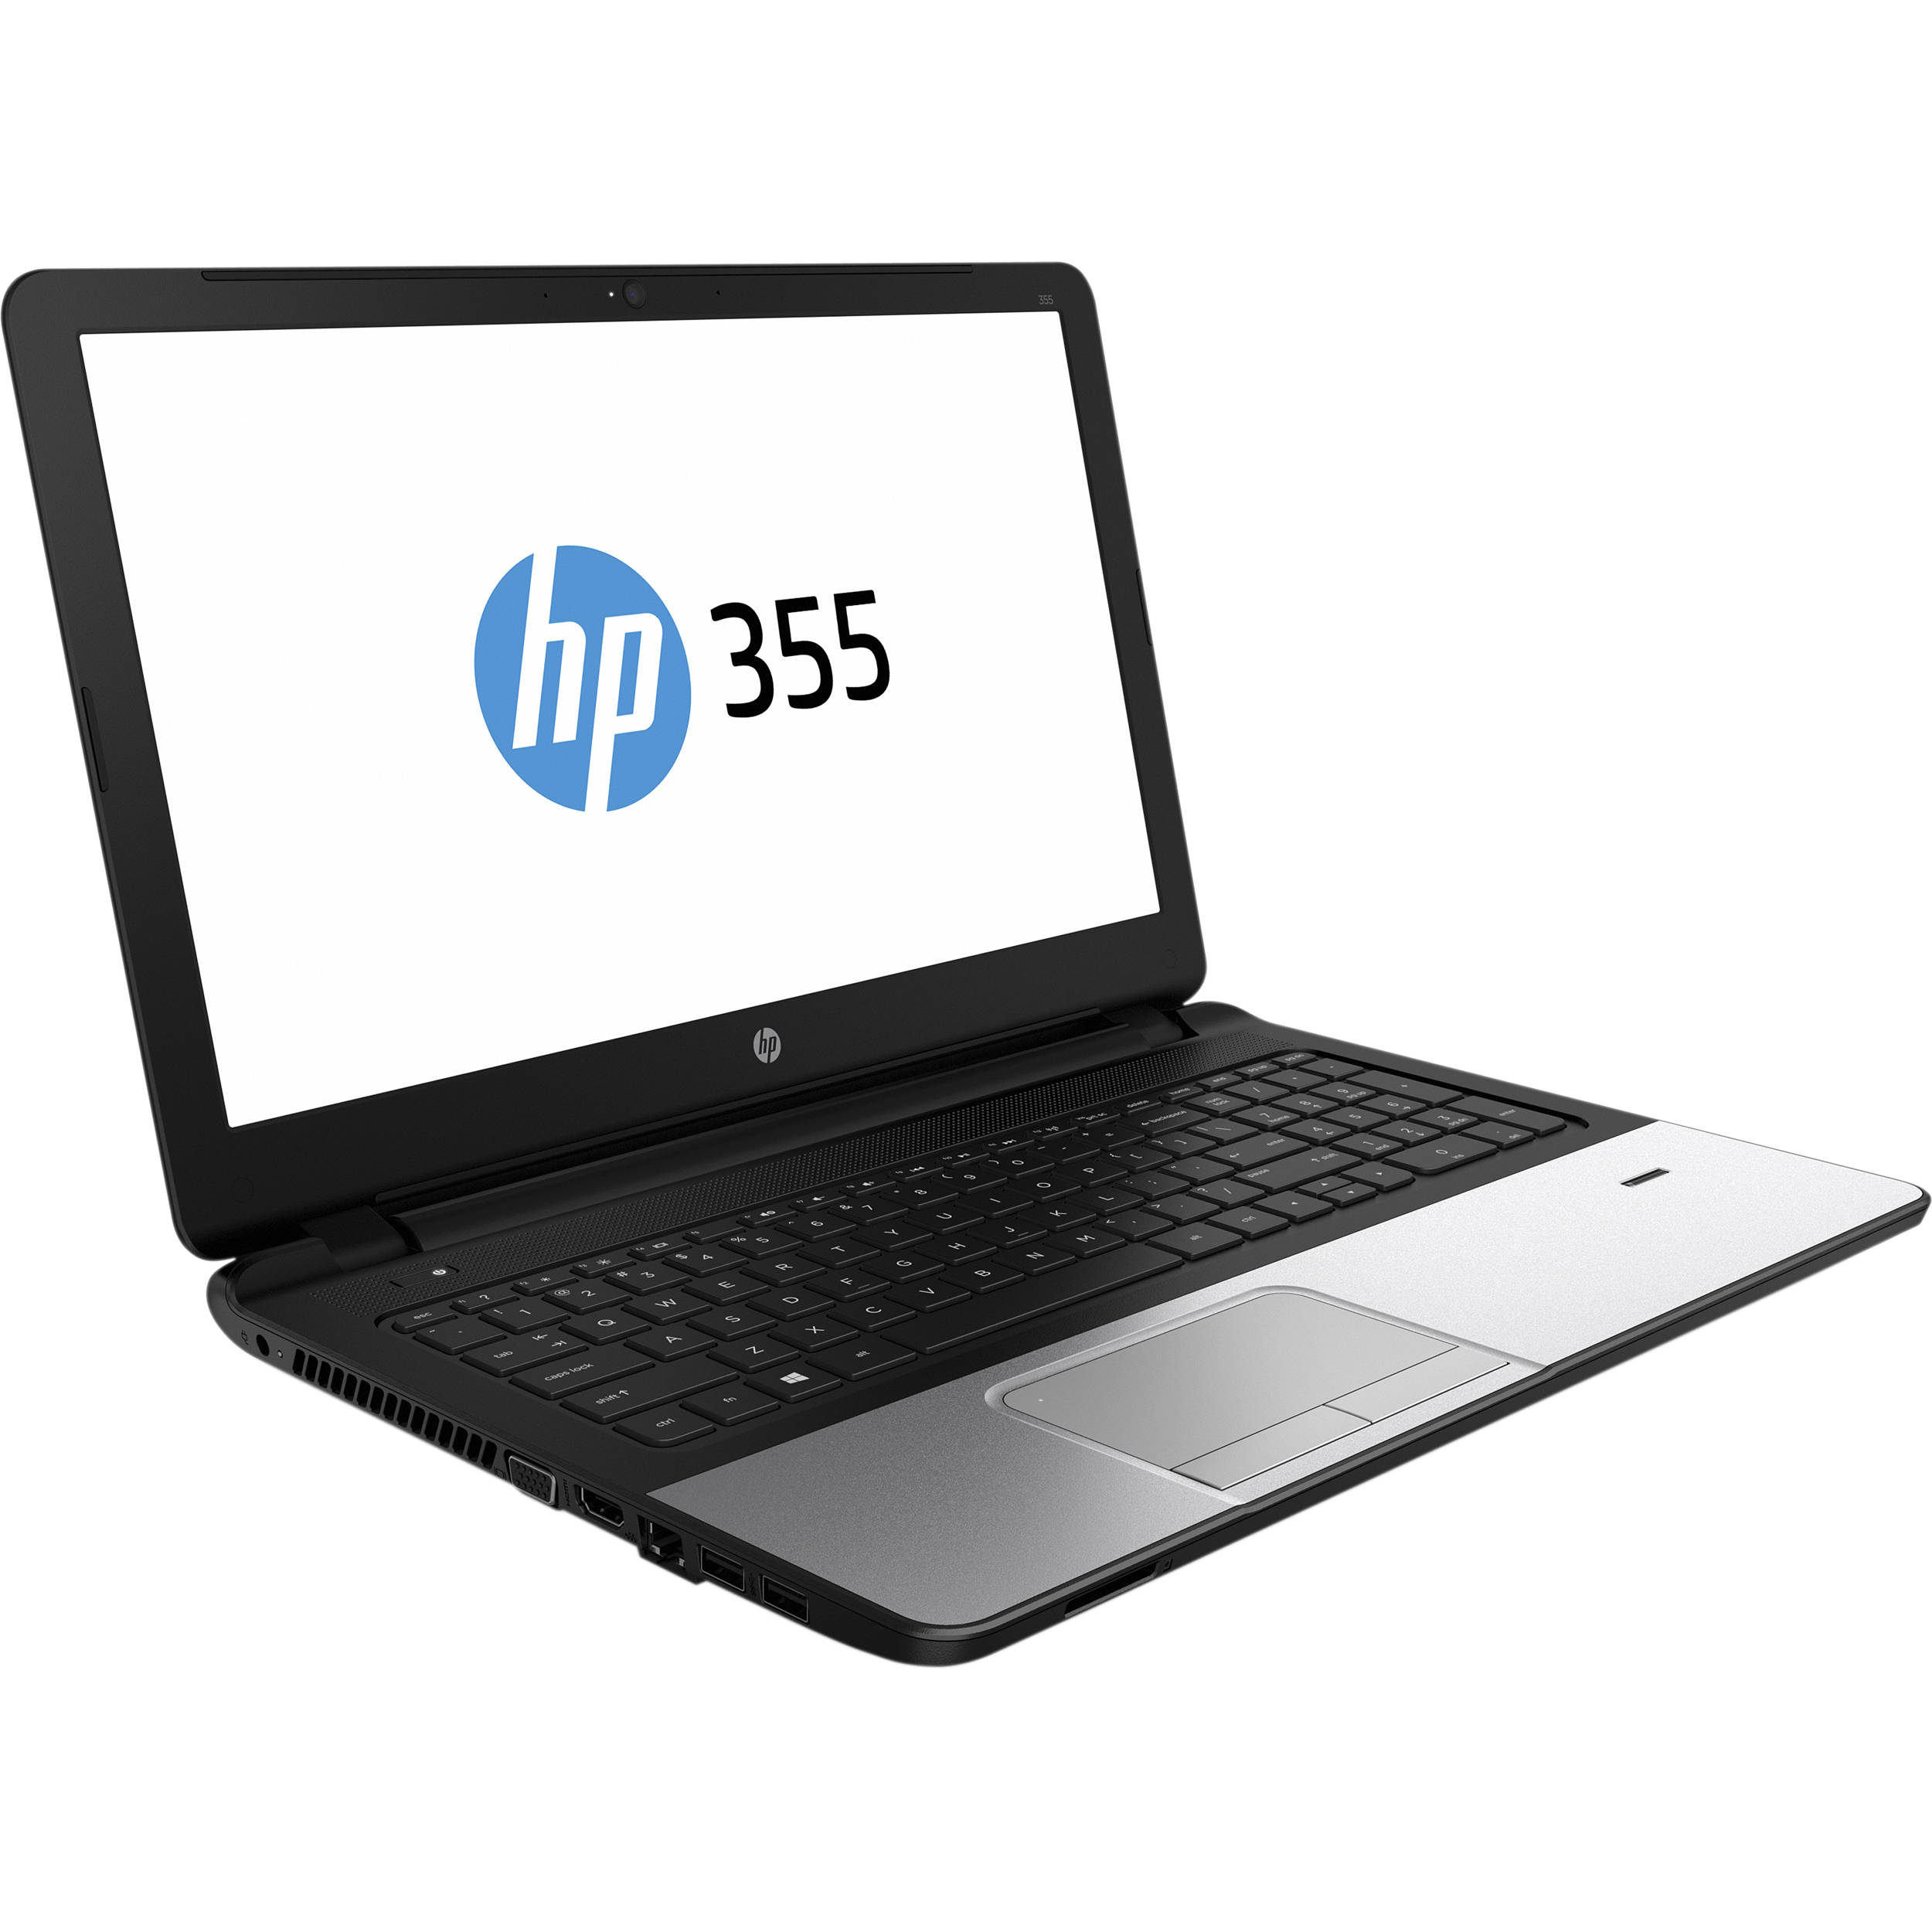 350 G1 Notebook PC